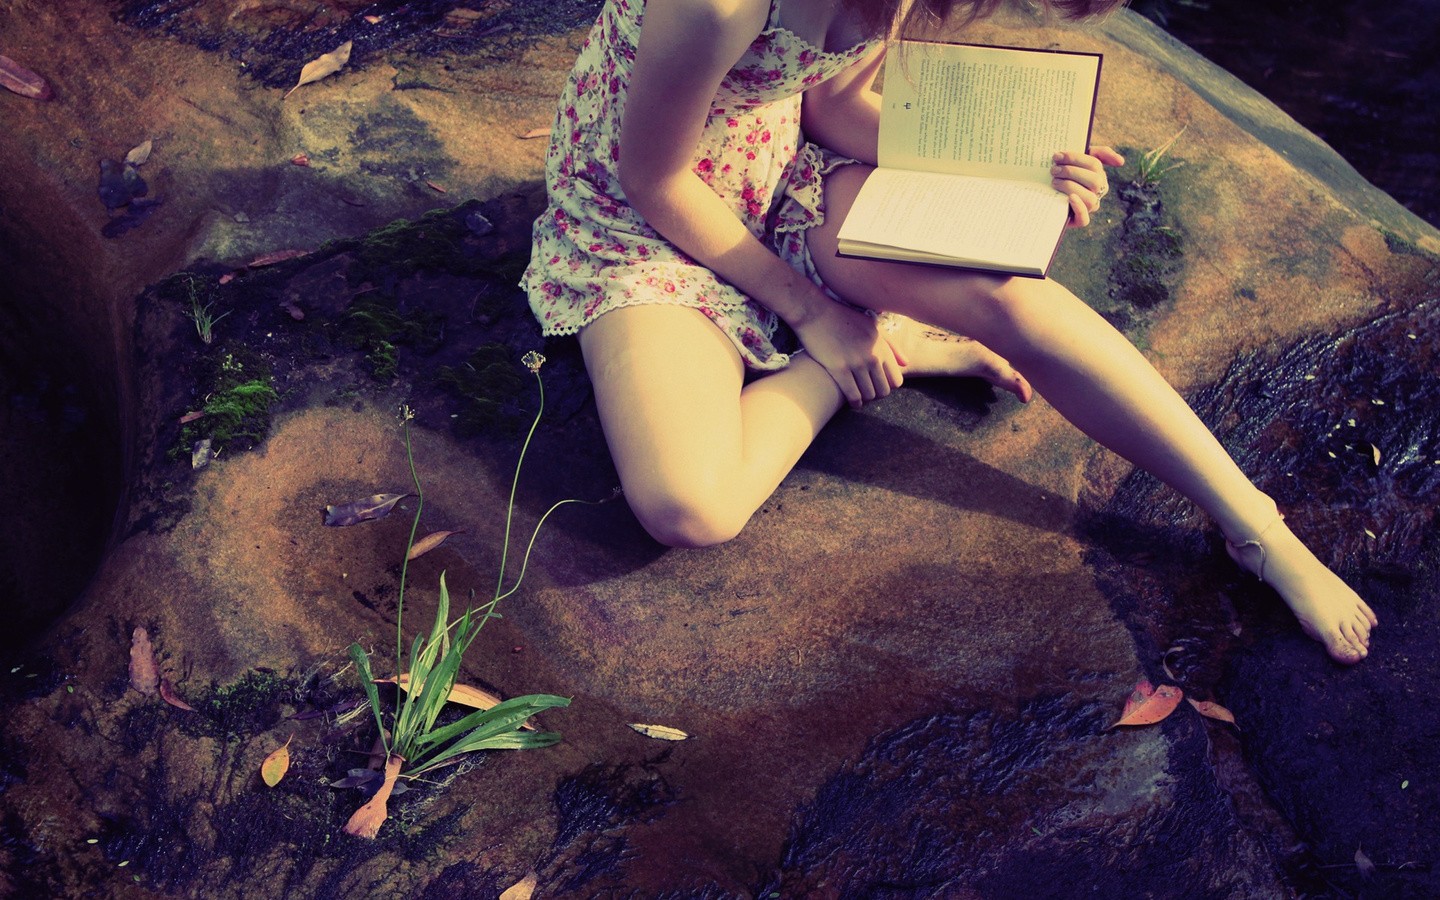 People 1440x900 model books barefoot introvert women outdoors sitting reading plants women